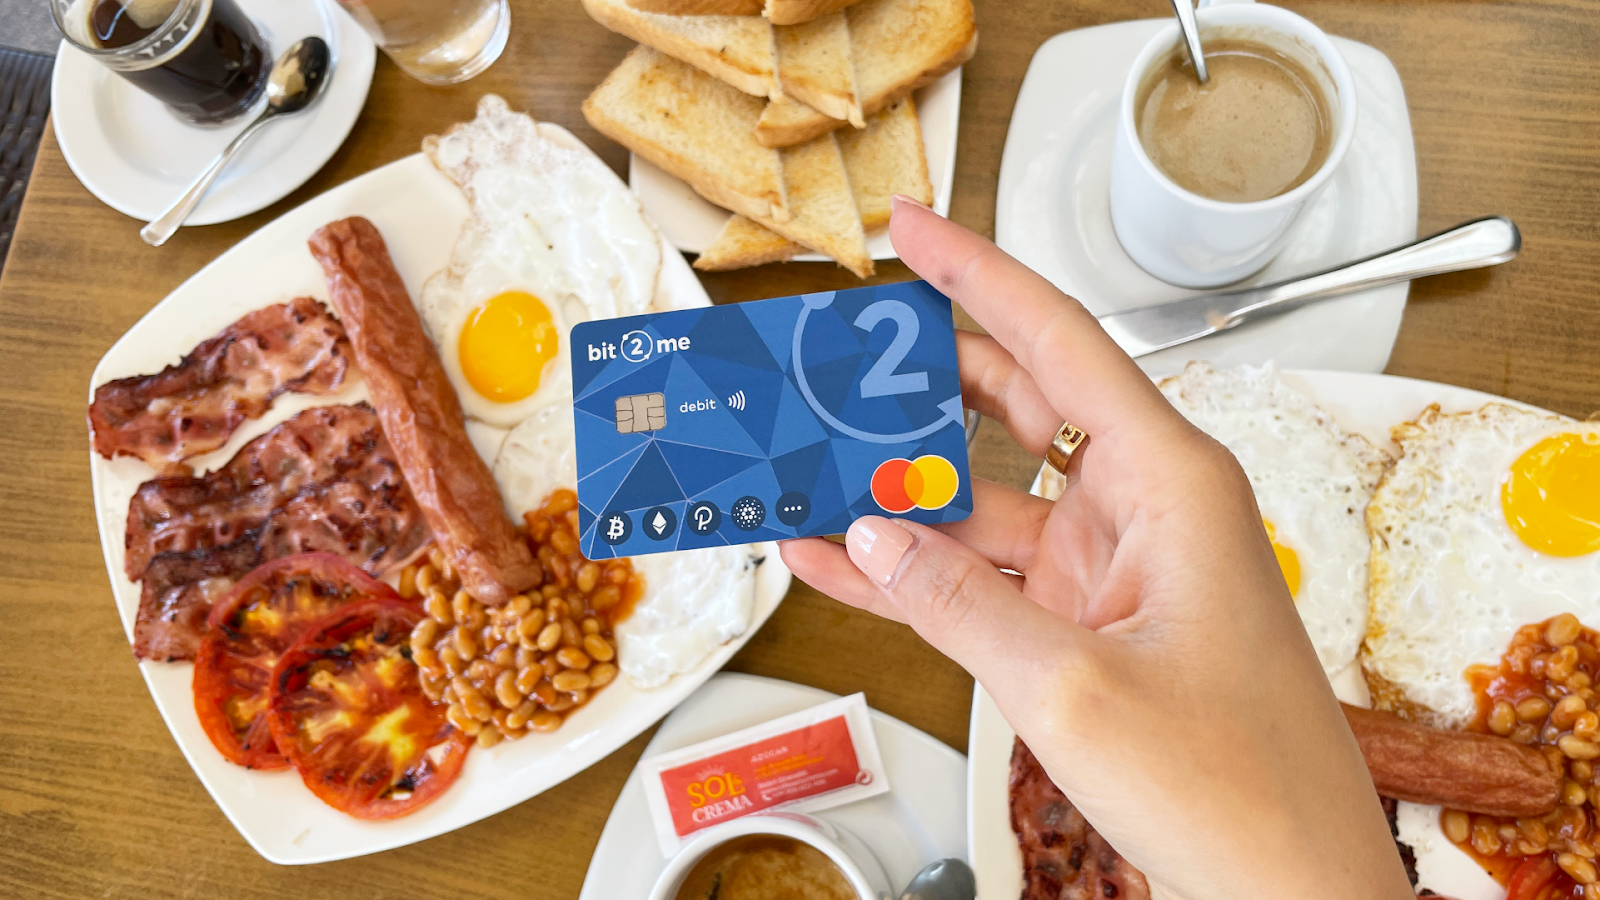 Spanish exchange Bit2Me launches debit card with 9% cashback program - 1